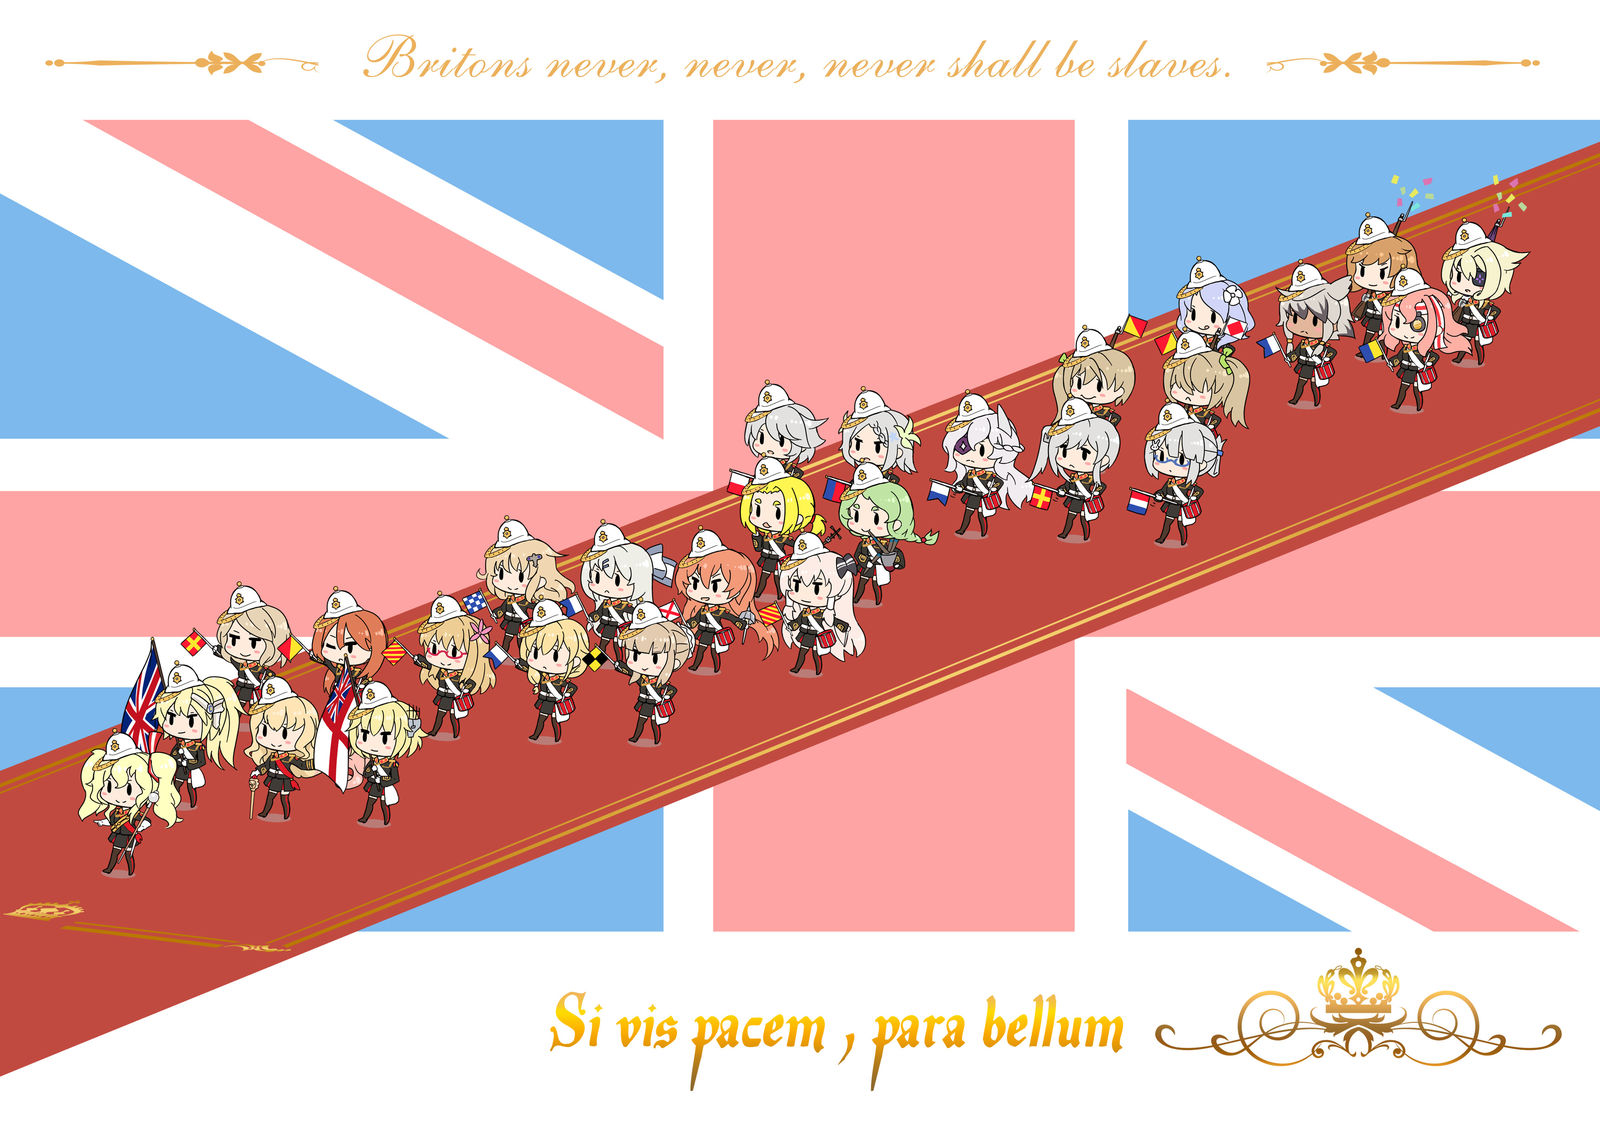 Royal Navy插画图片壁纸